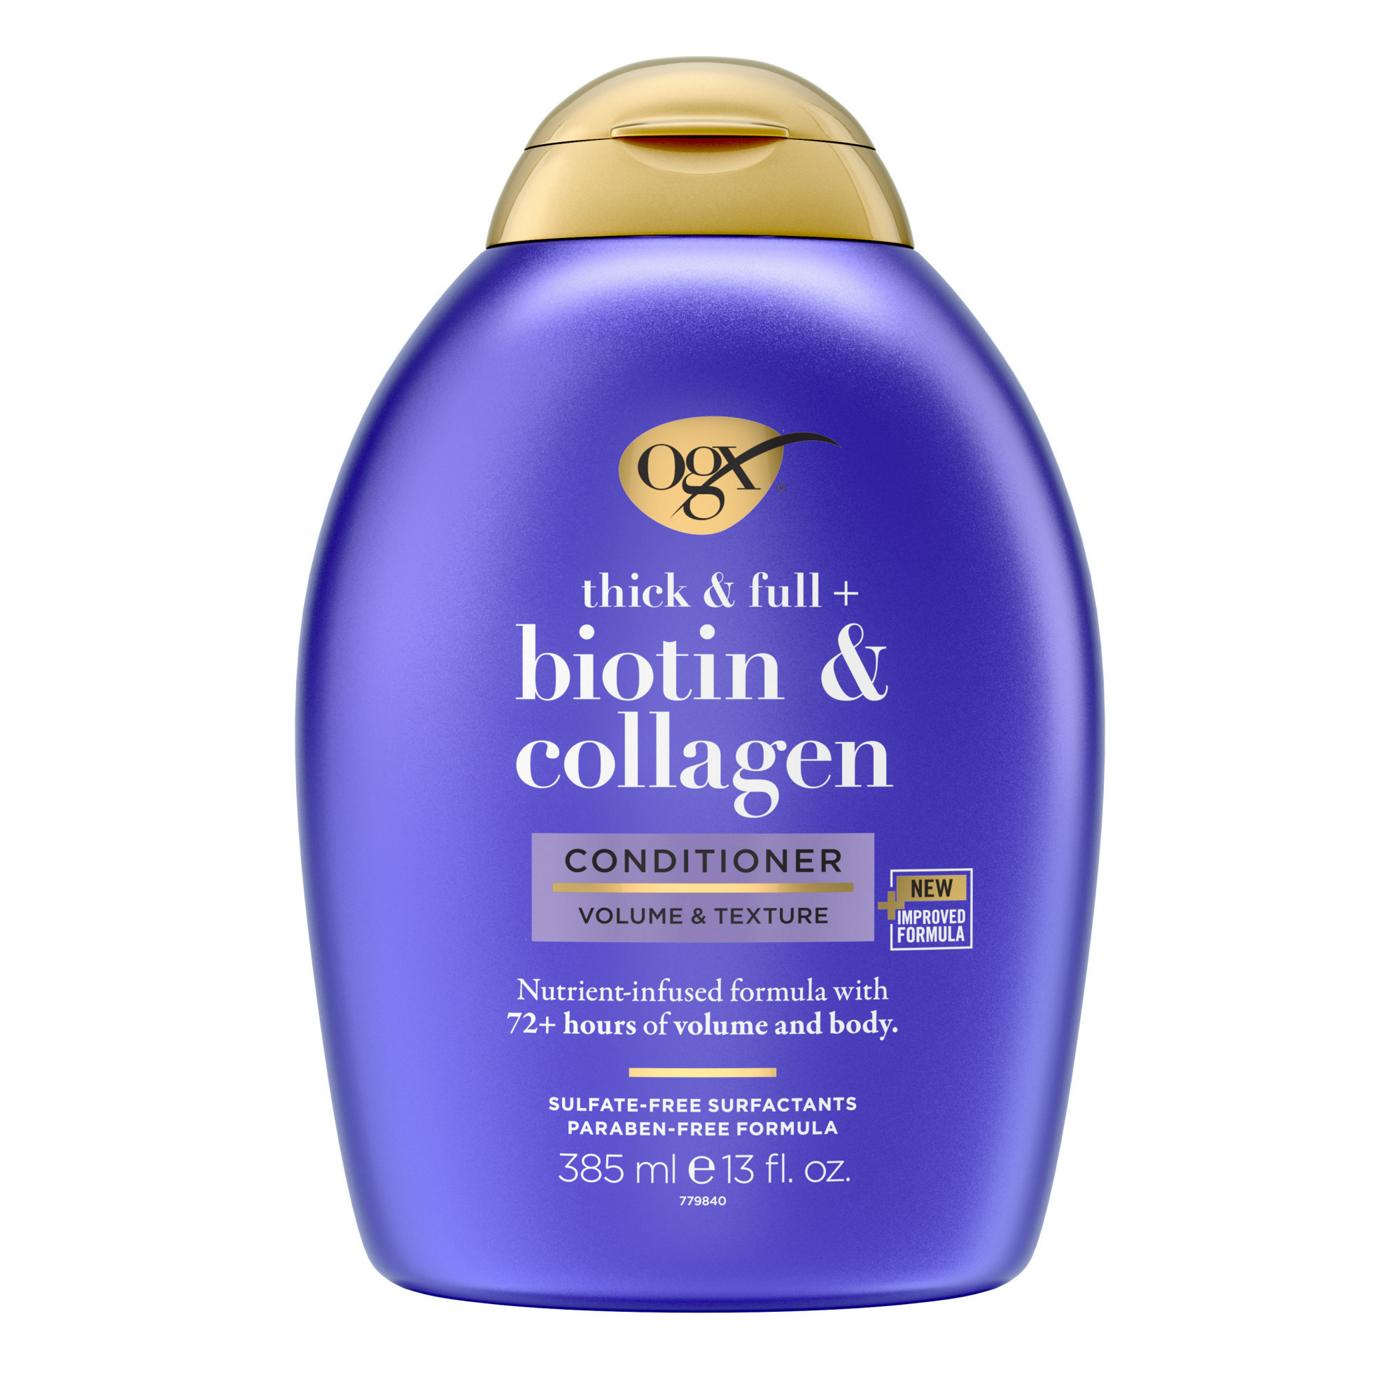 OGX Thick & Full + Biotin & Collagen Conditioner; image 1 of 8